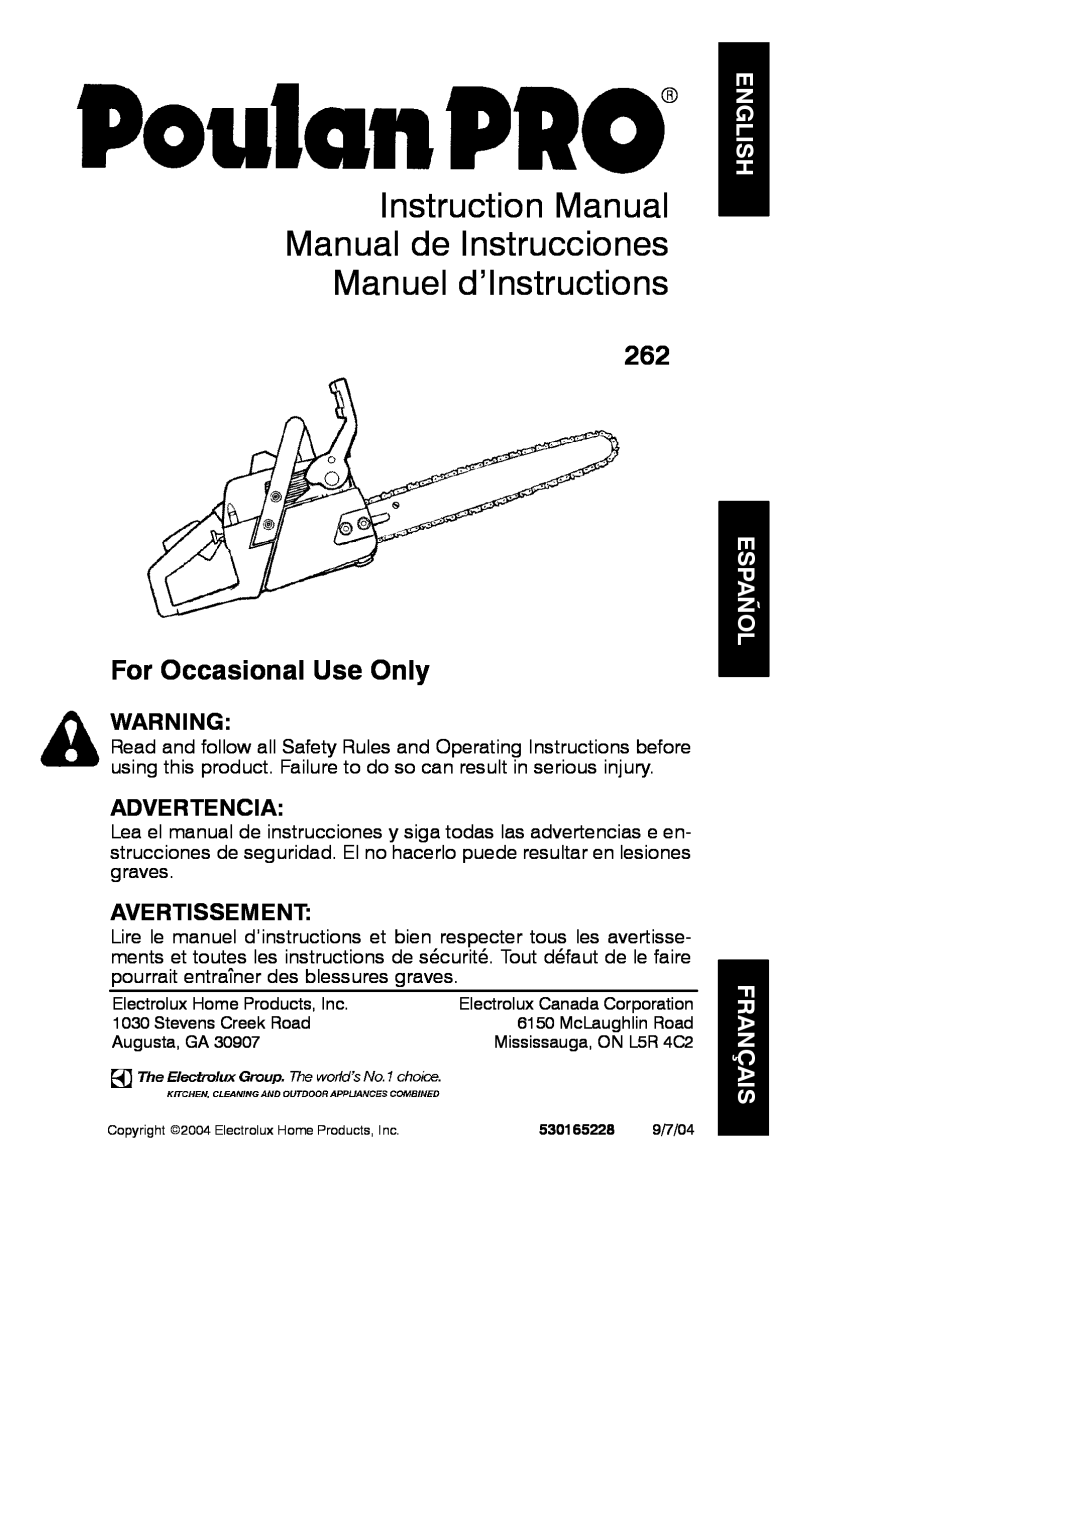 Poulan 530165228 instruction manual English Español Français, Manuel d’Instructions, For Occasional Use Only, Advertencia 